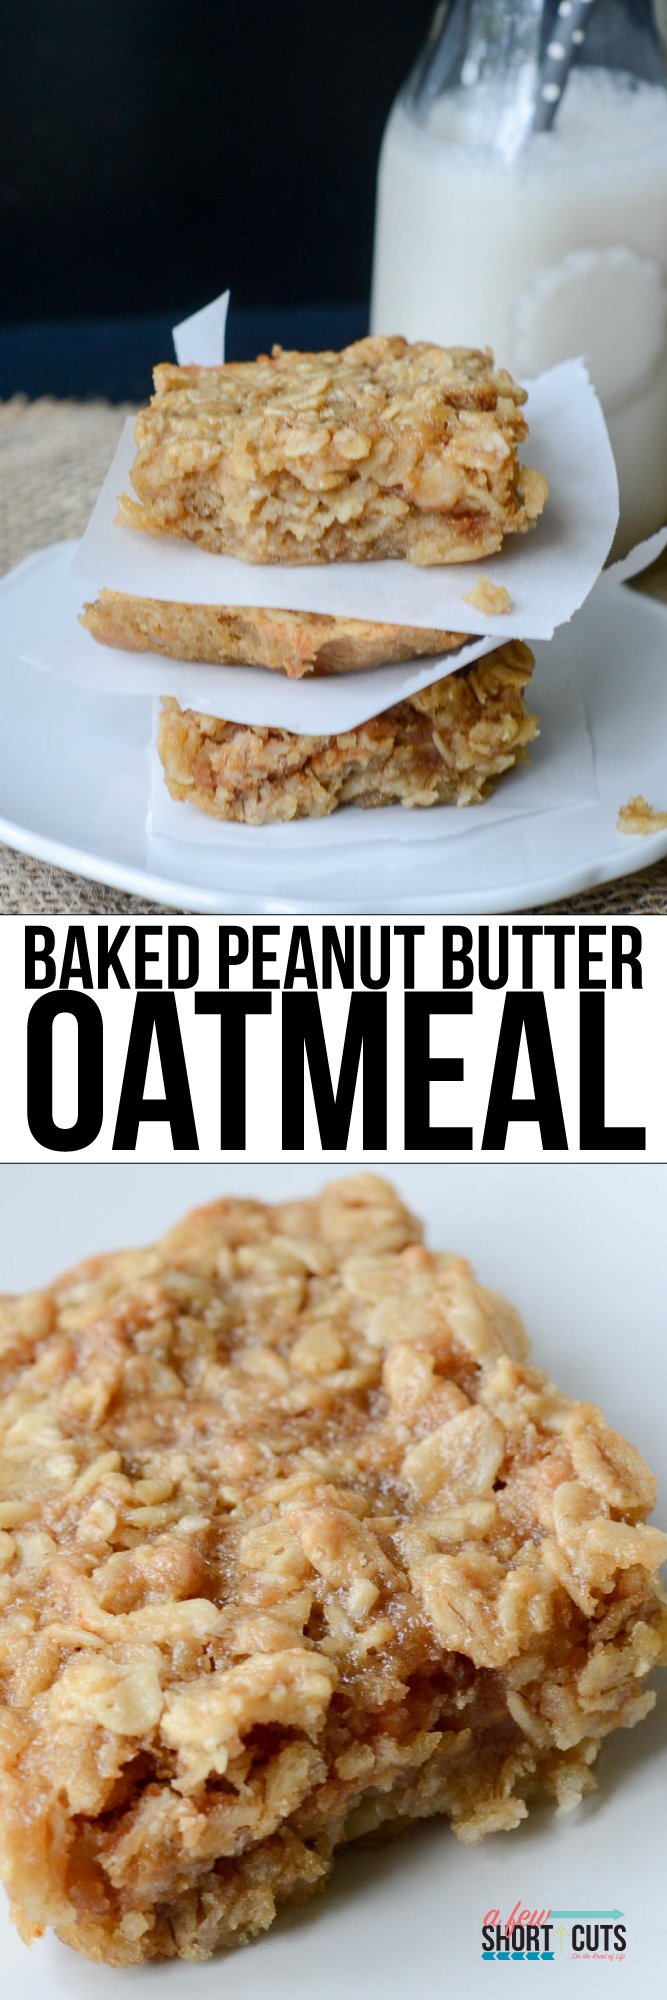 Baked-Peanut-Butter-Oatmeal-